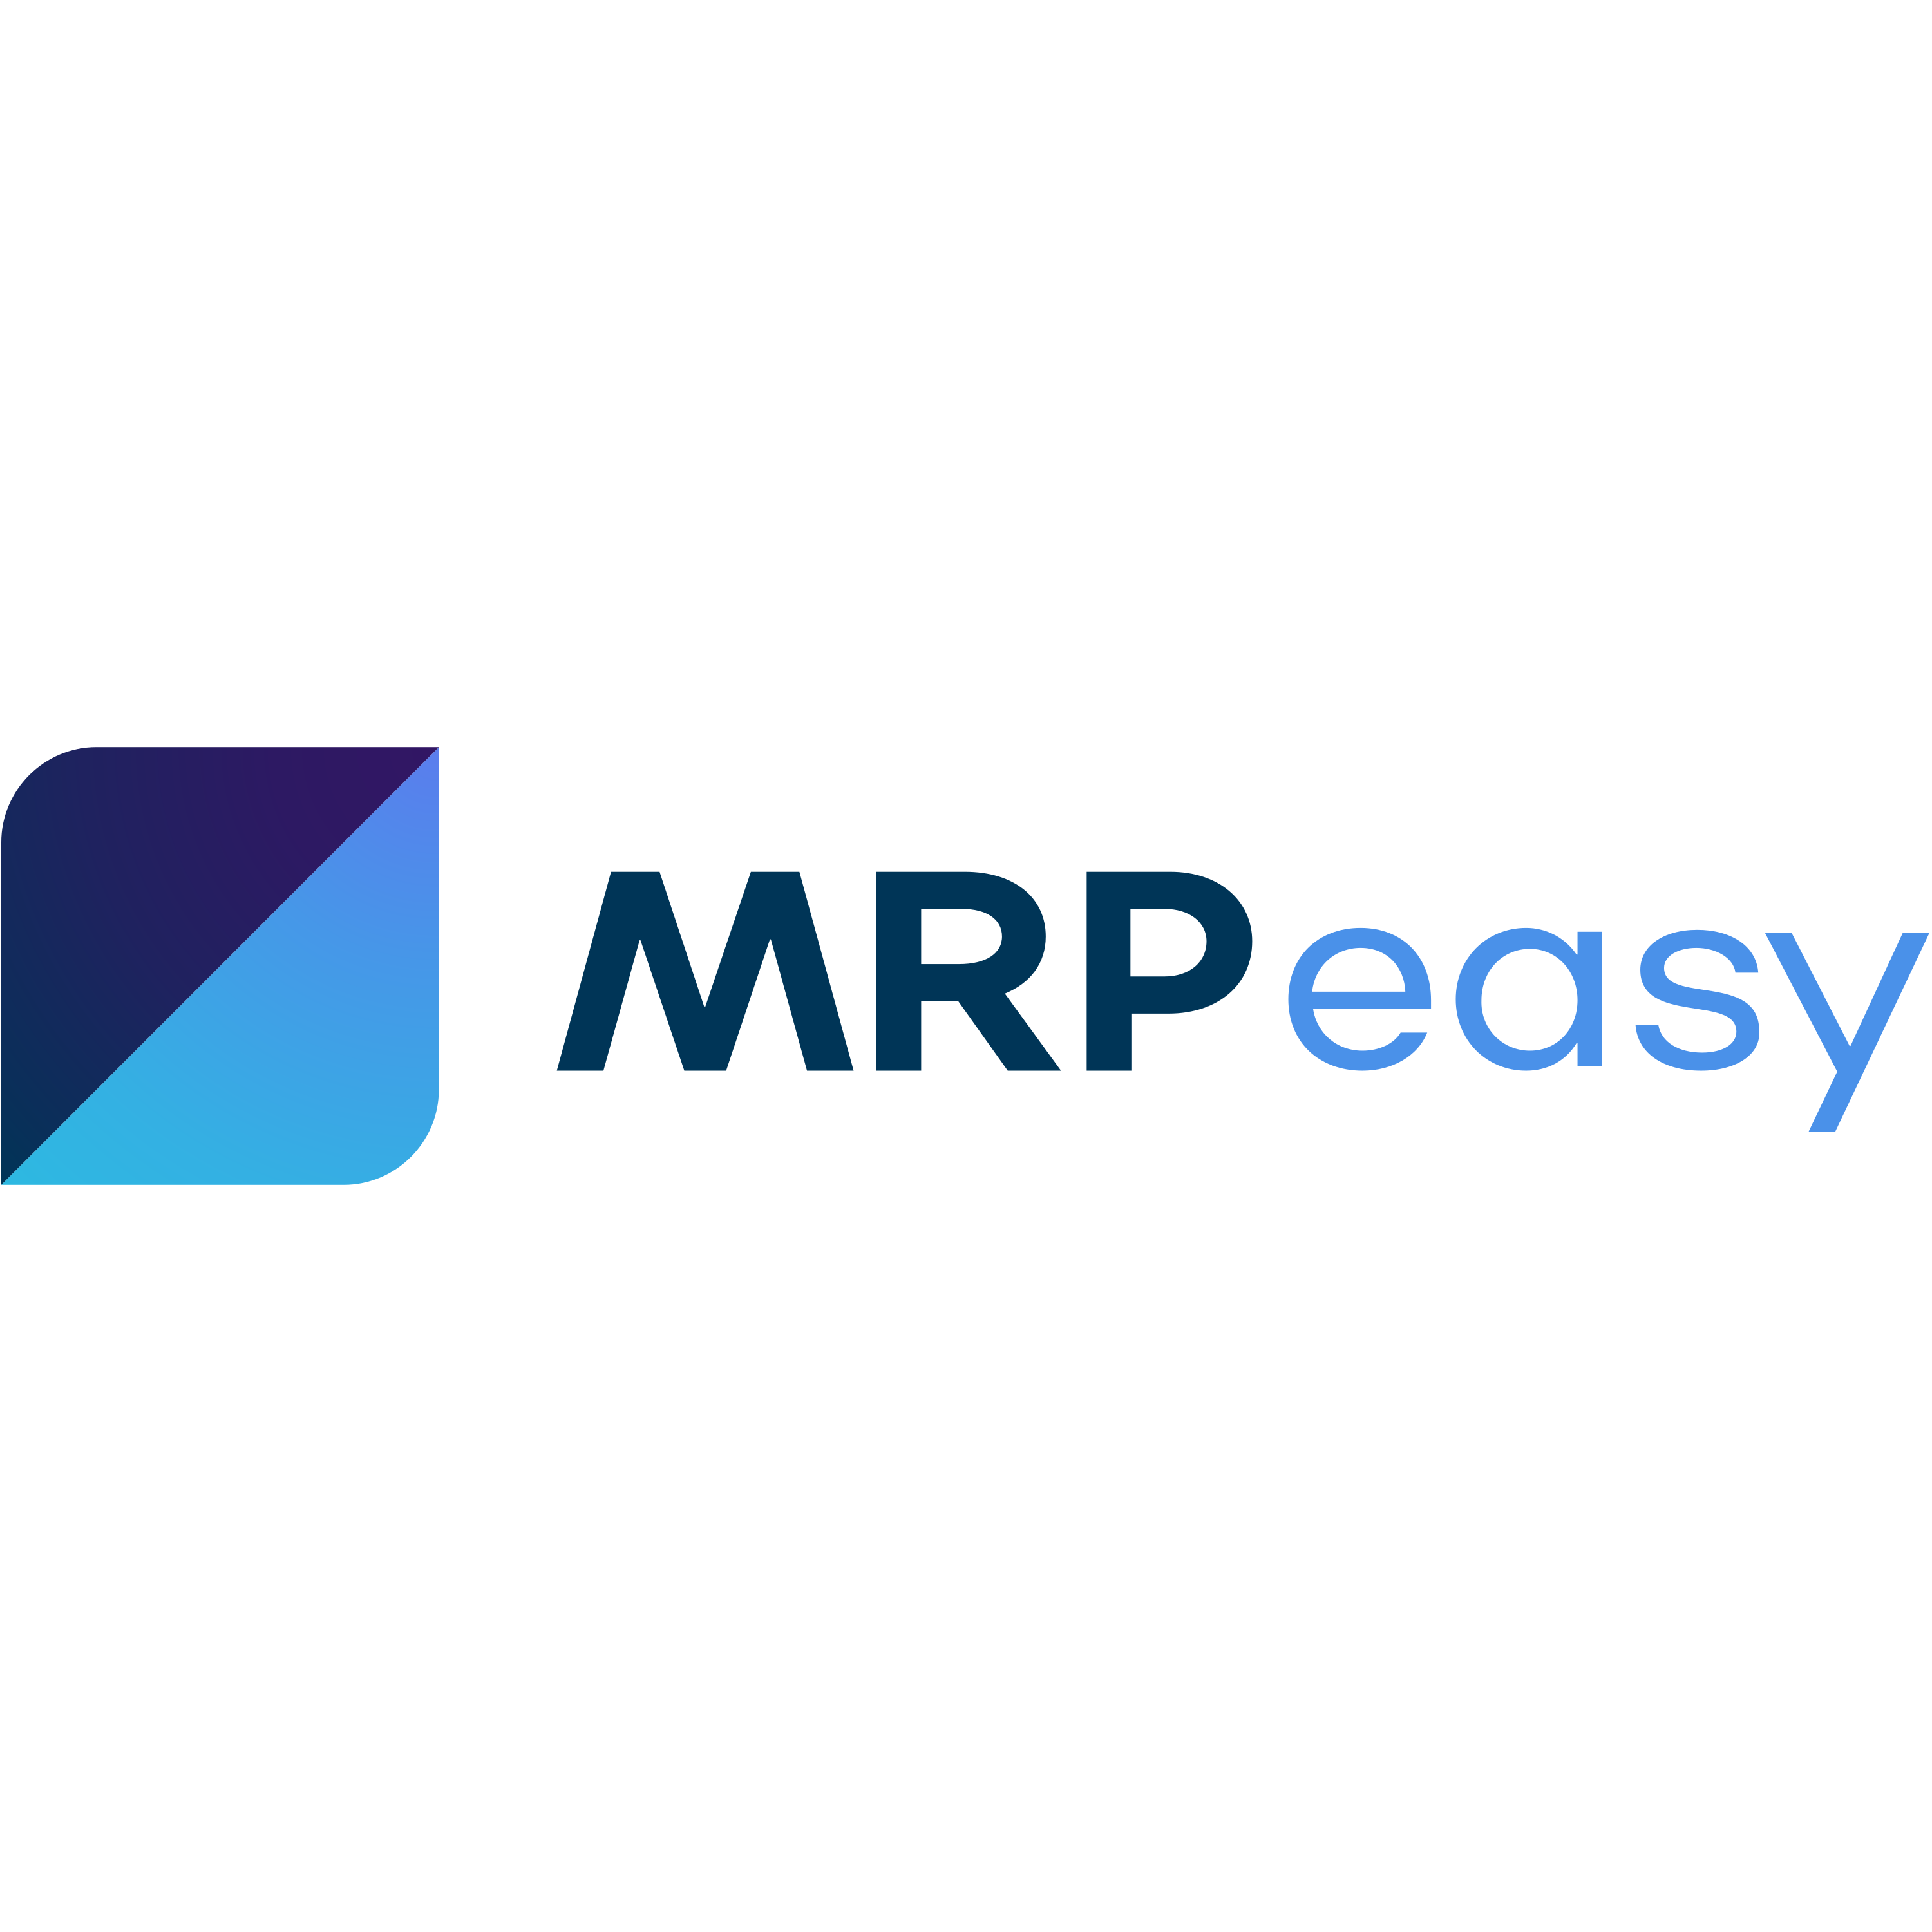 MRPeasy Logo  Transparent Image